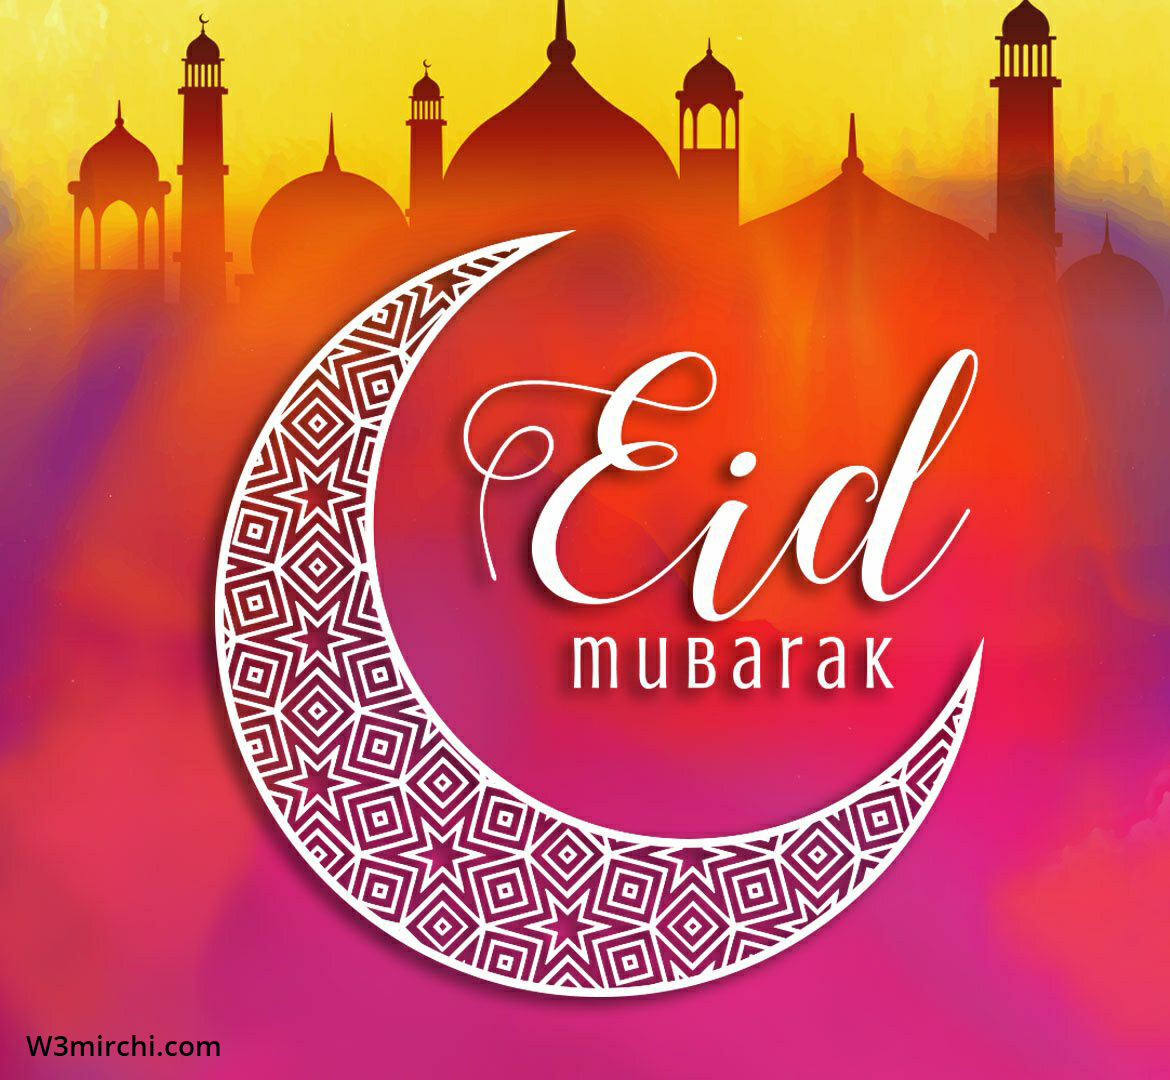 Eid Mubarak Wishes - Eid Mubarak Images In Hd